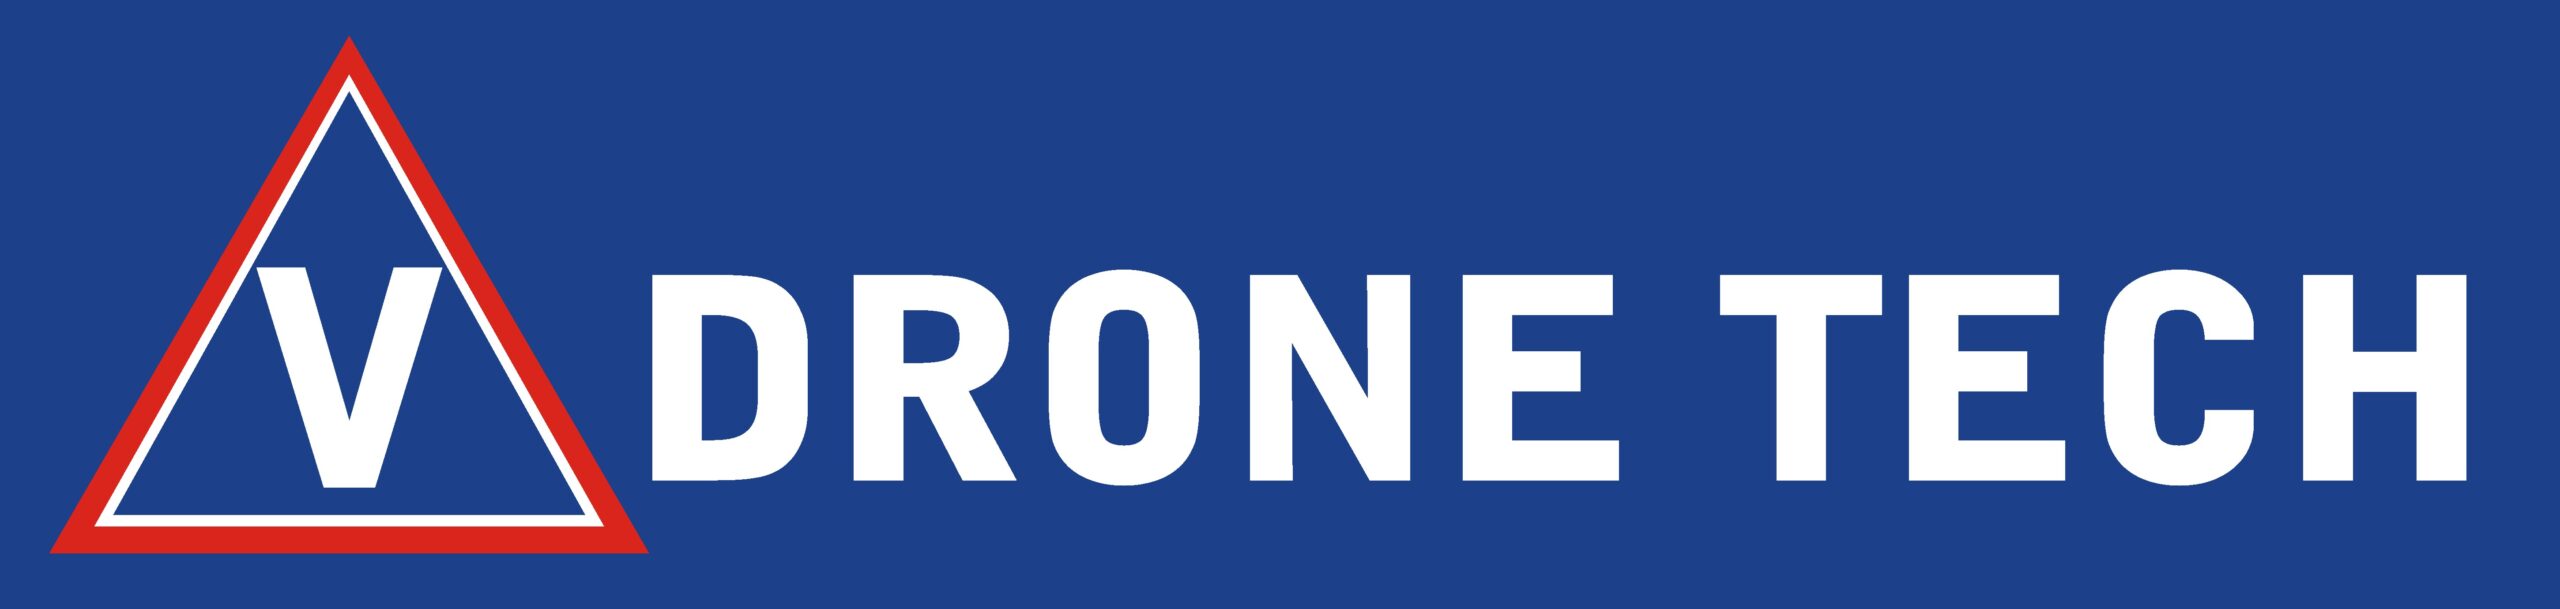 VDroneTech logo